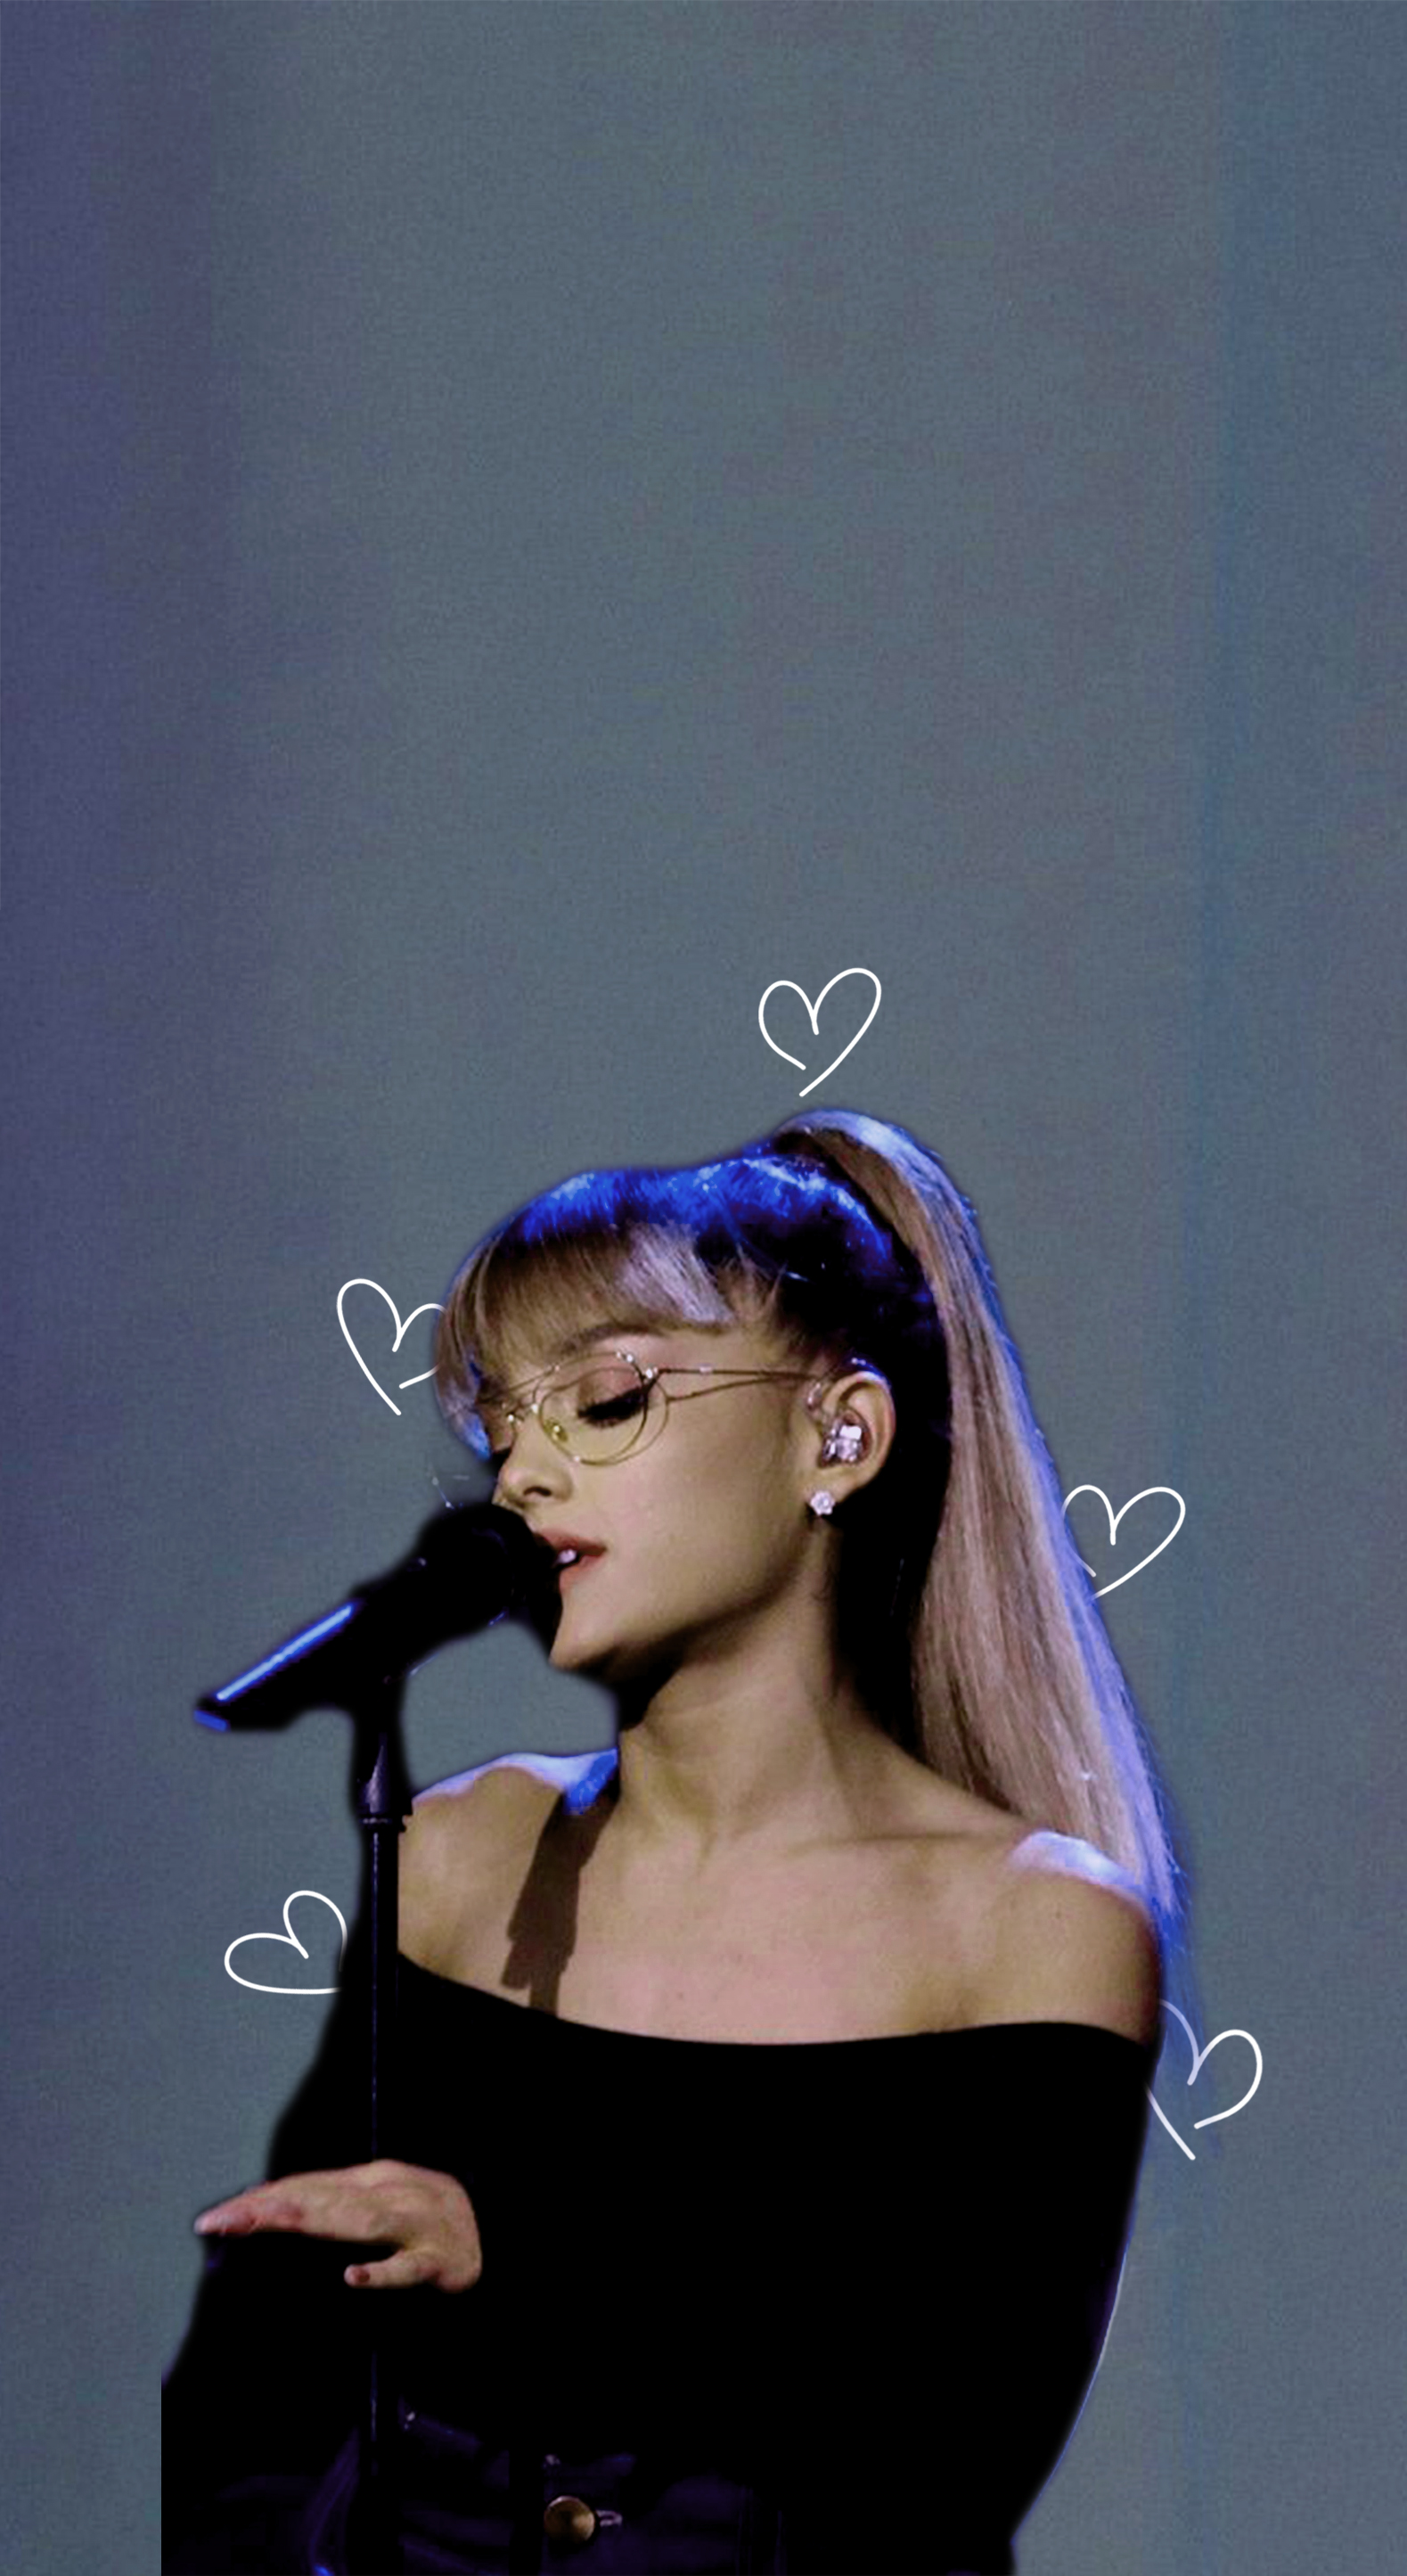 Ariana Grande Singer Wallpapers